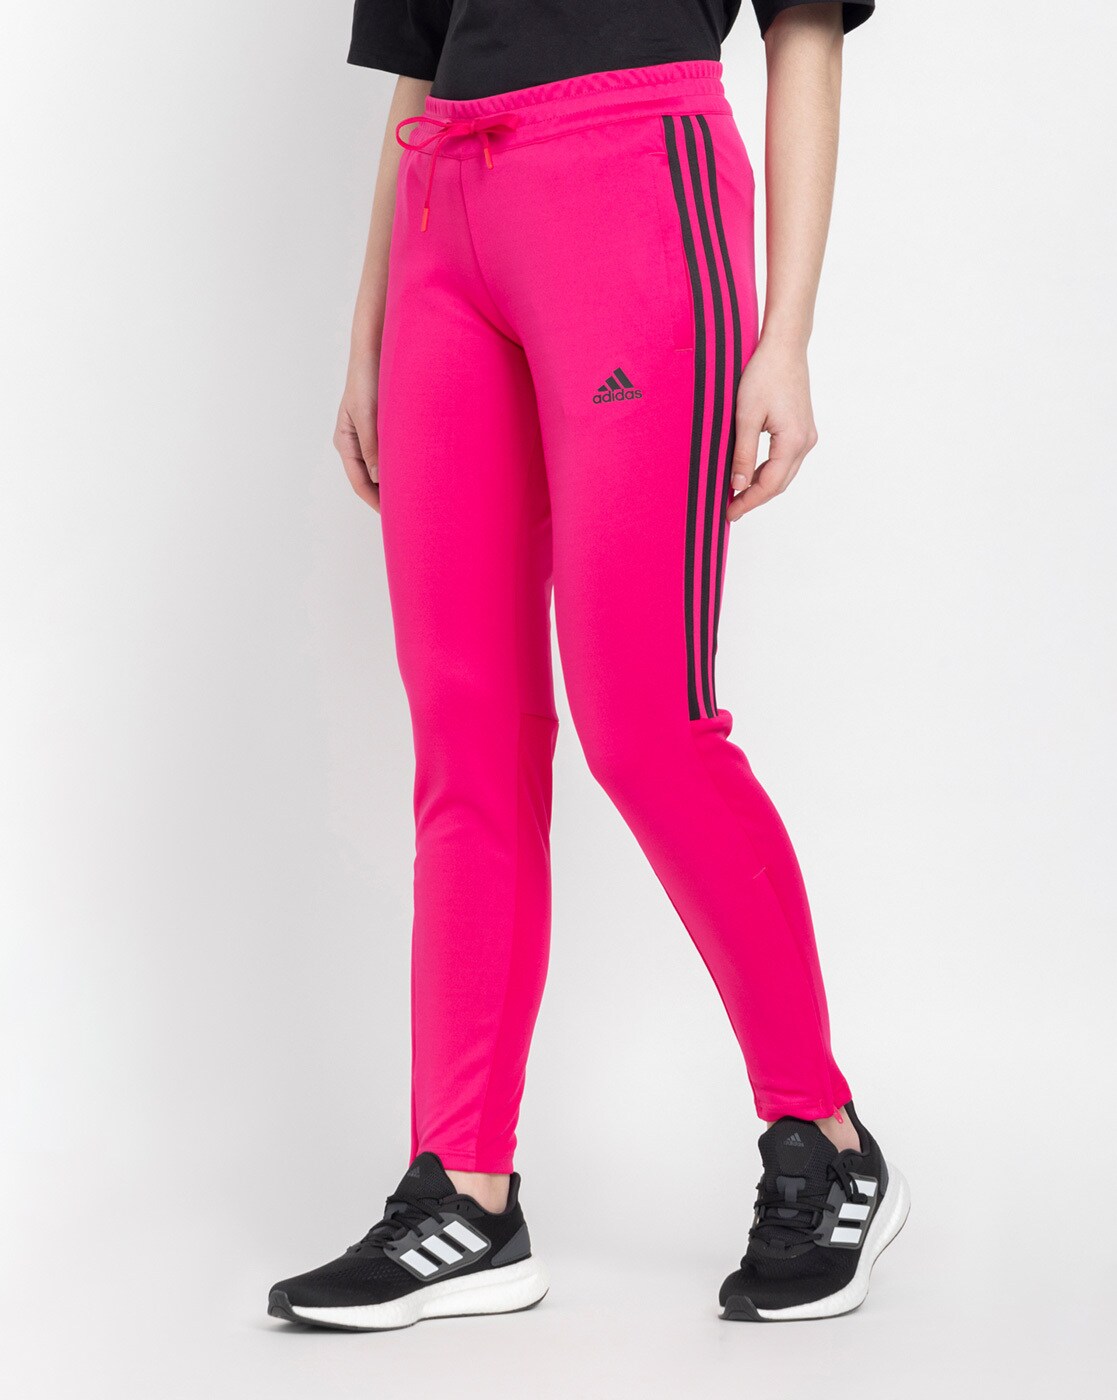  Pink Adidas Pants